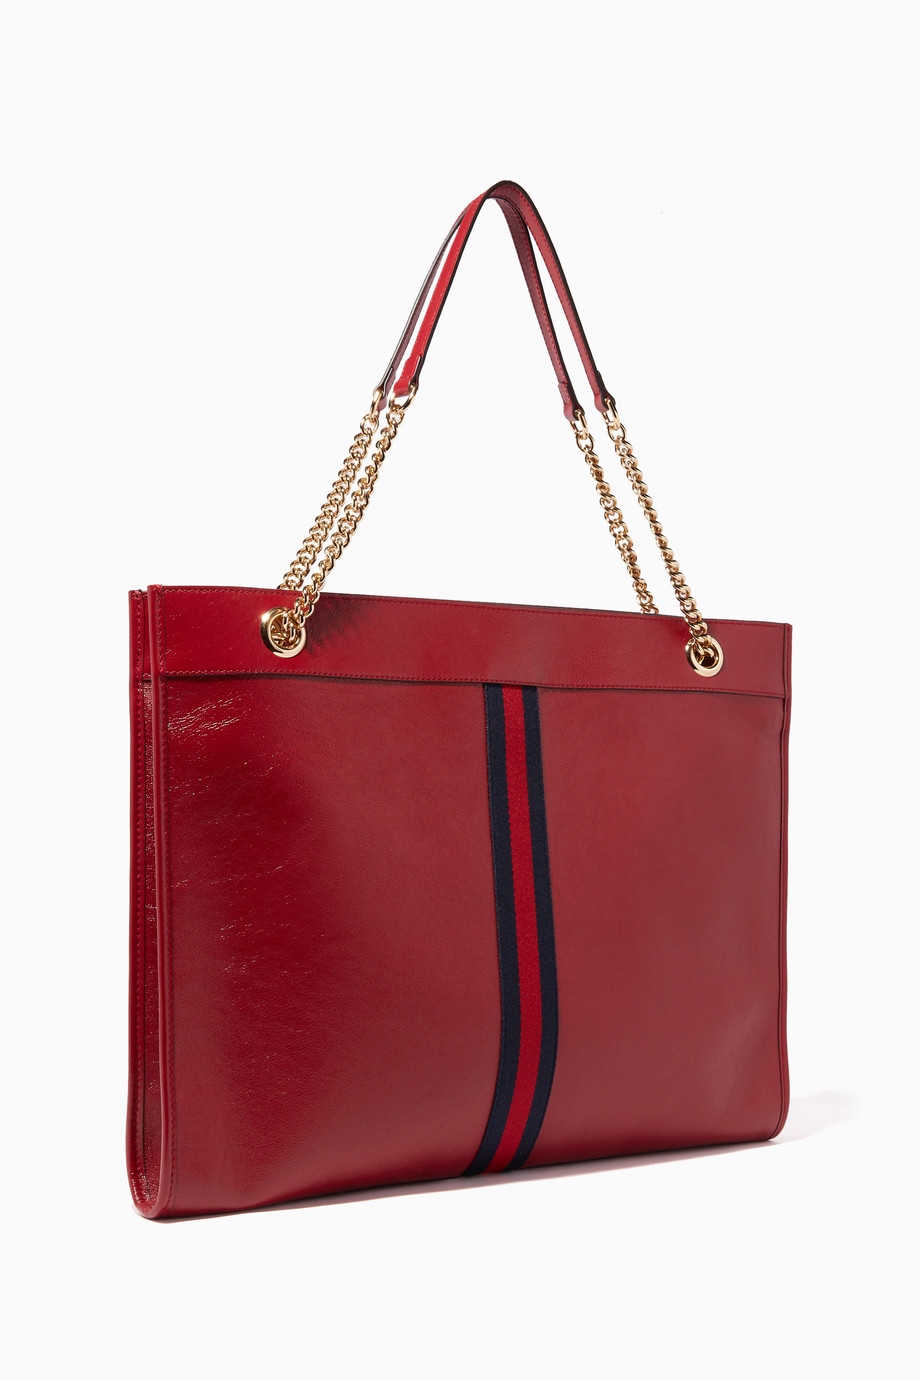 Shop Gucci Red Red Rajah Leather Shoulder Bag for Women